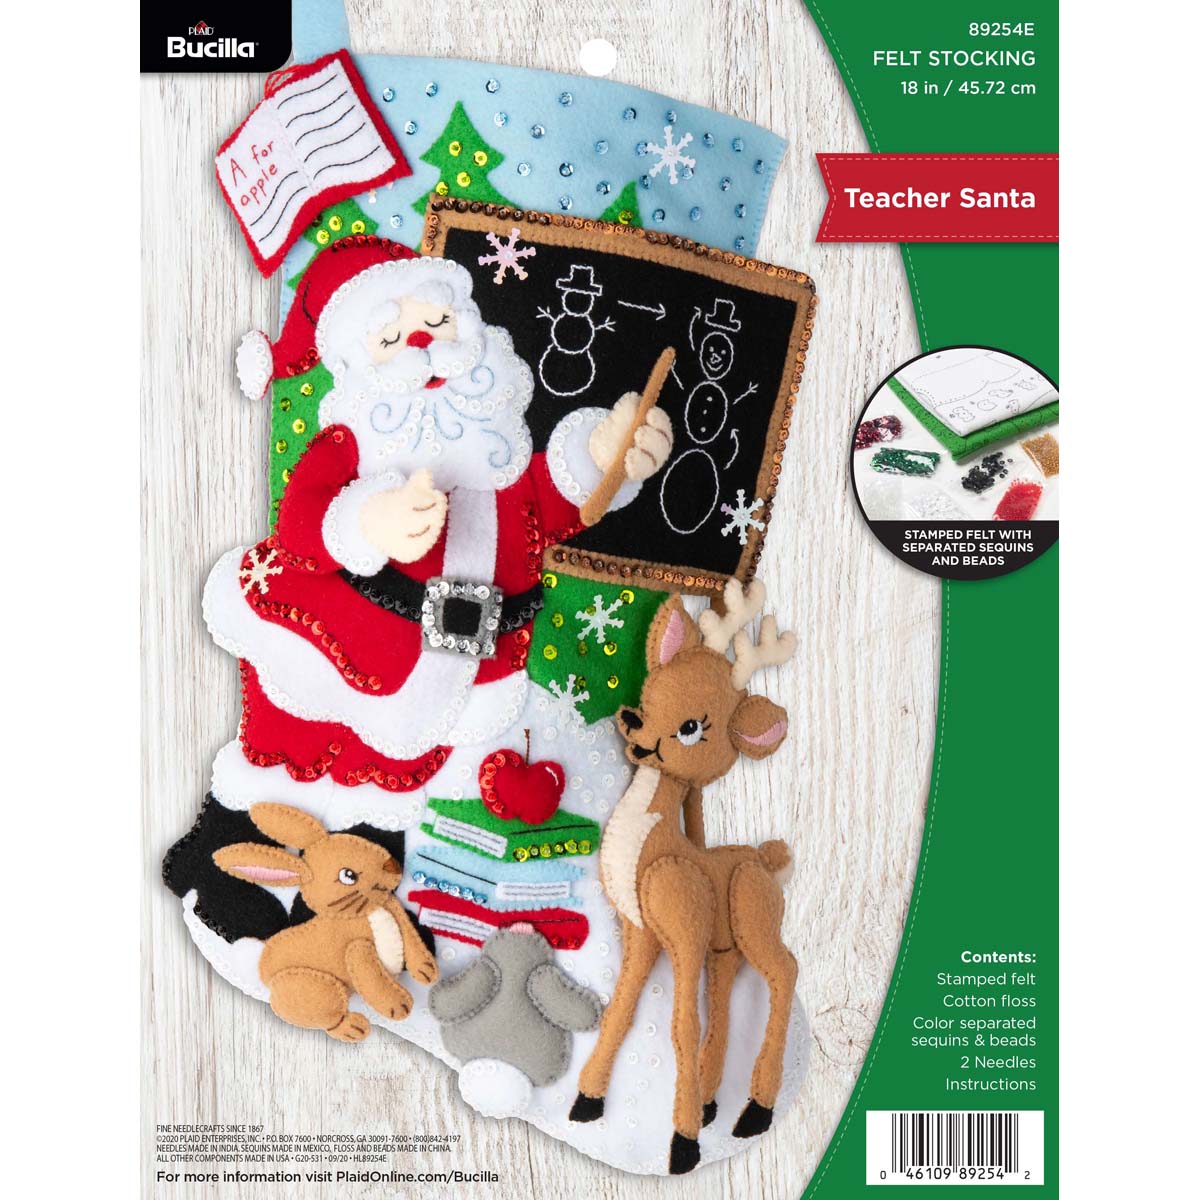 Shop Plaid Bucilla ® Seasonal - Felt - Stocking Kits - Santa Poinsettia -  86142 - 86142